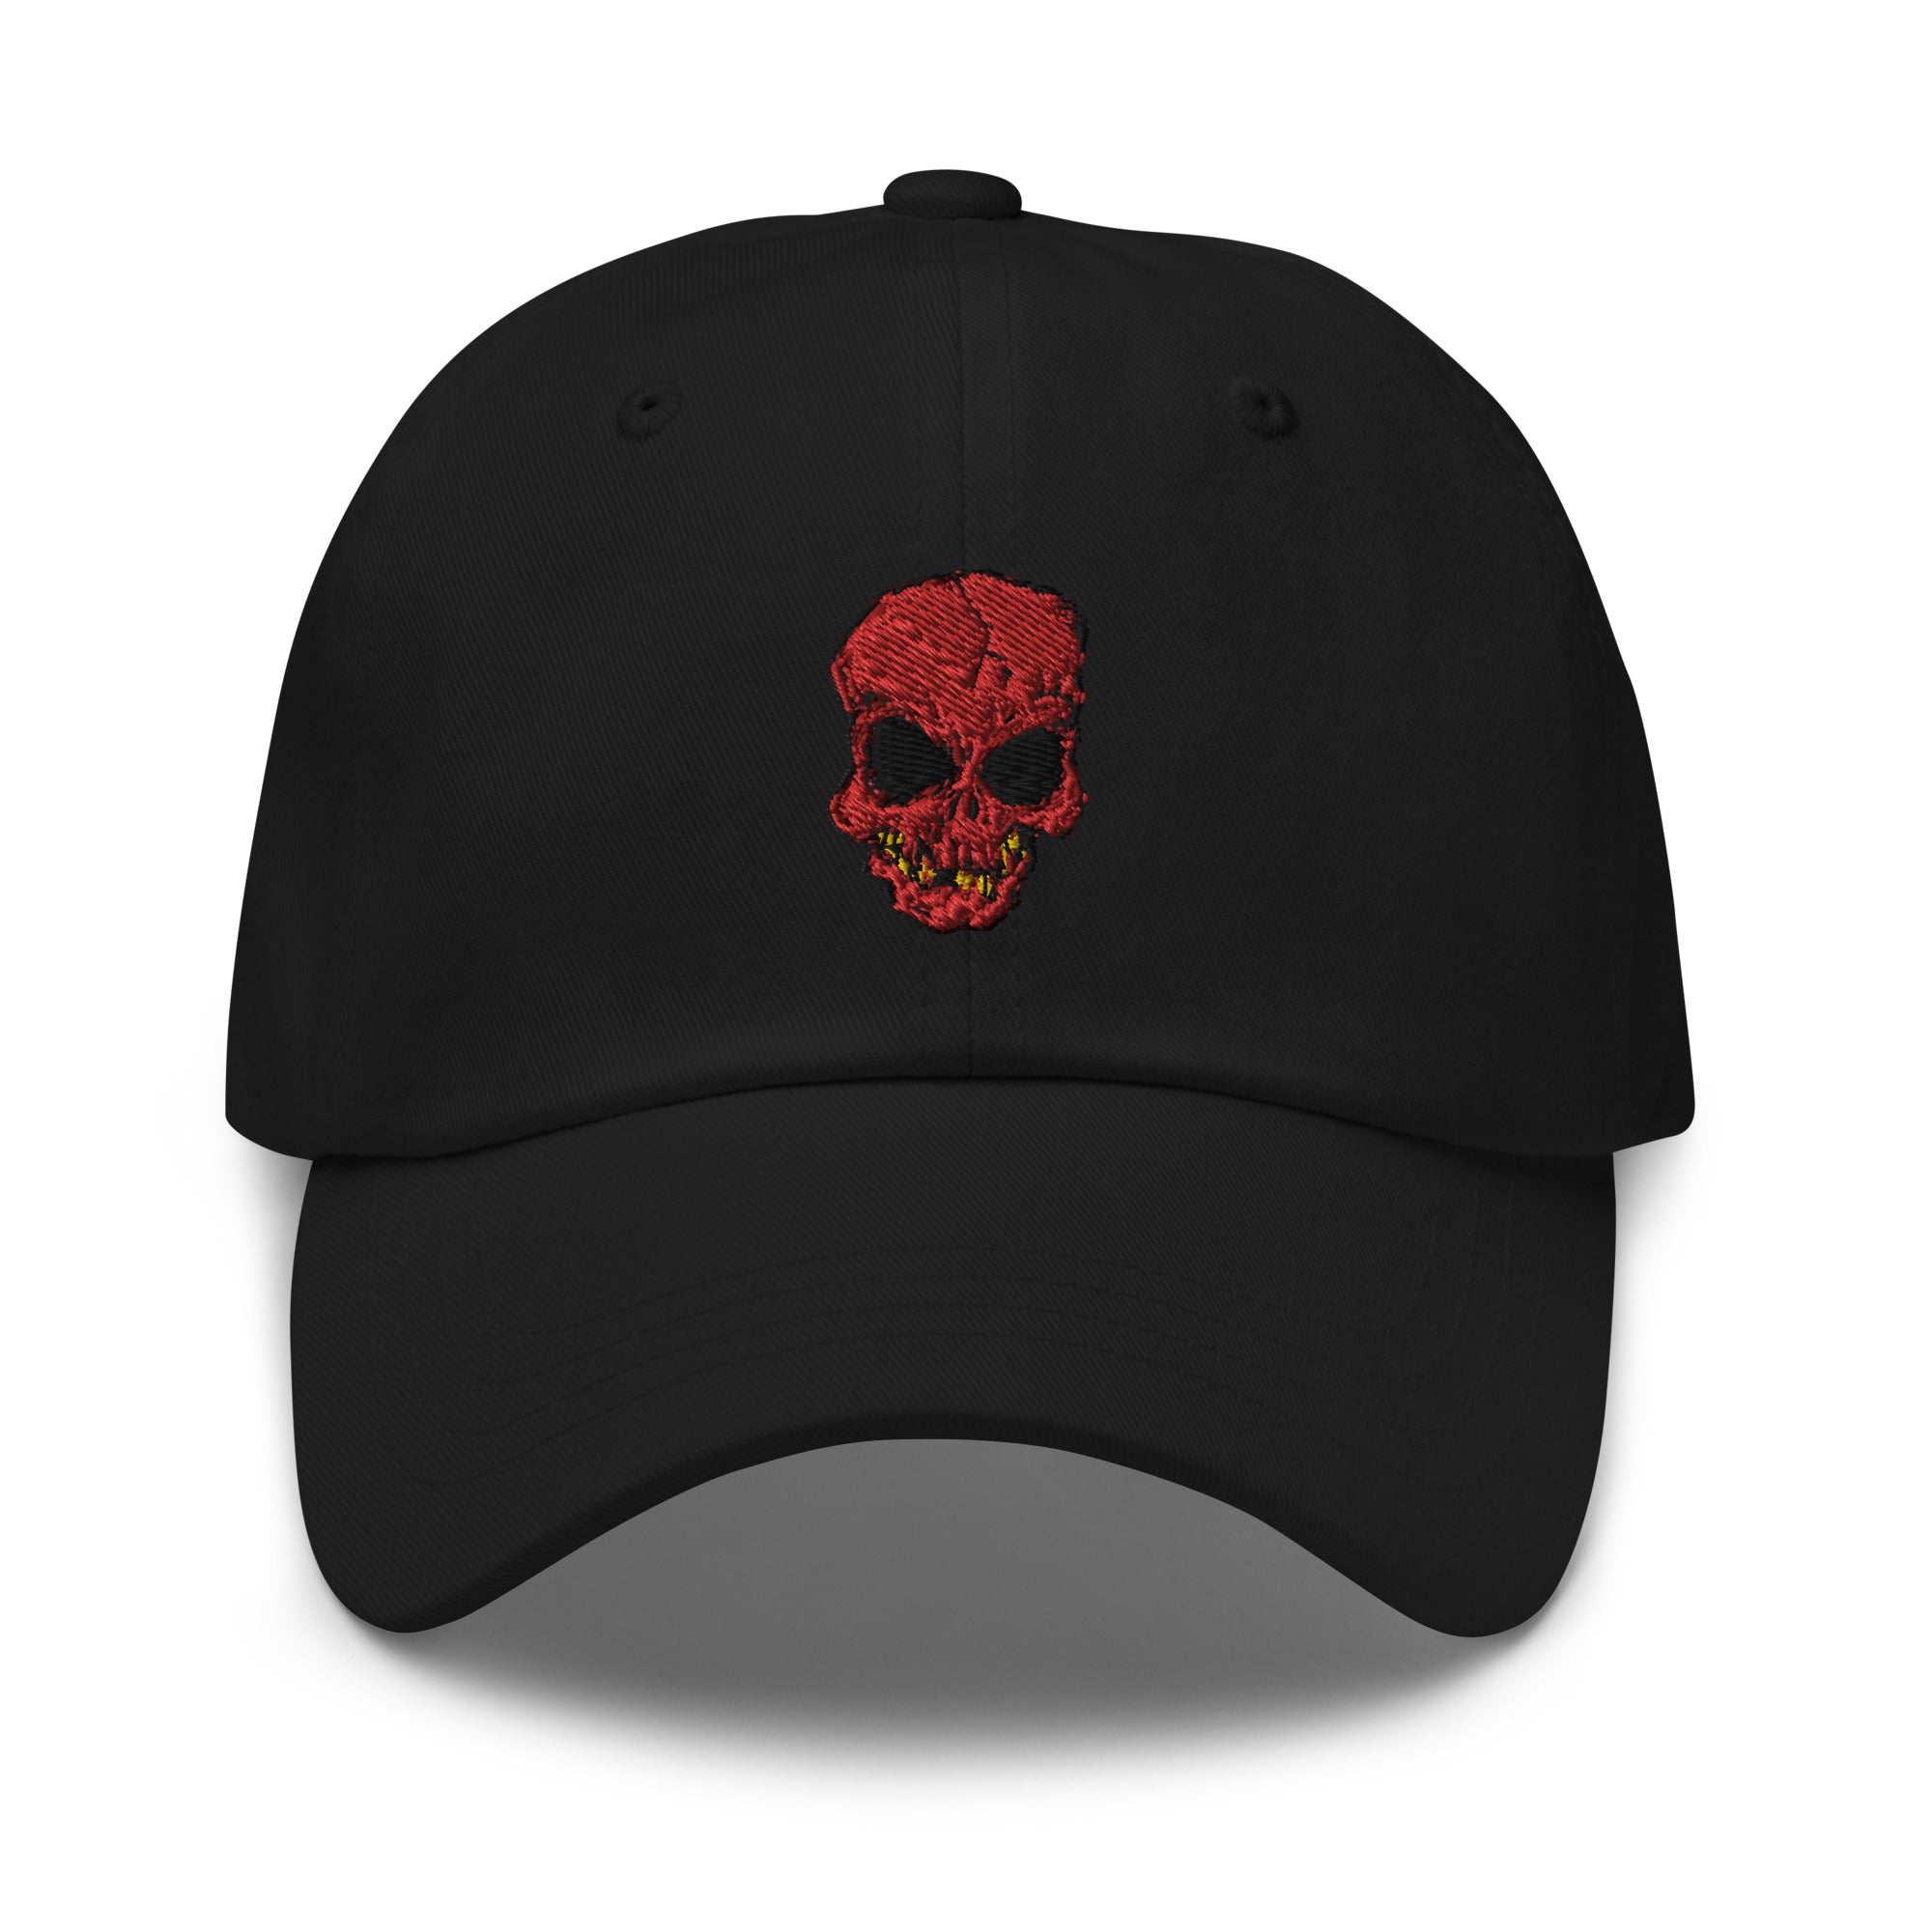 Broken Creepy Skull Embroidered Baseball Cap Dad hat - Edge of Life Designs